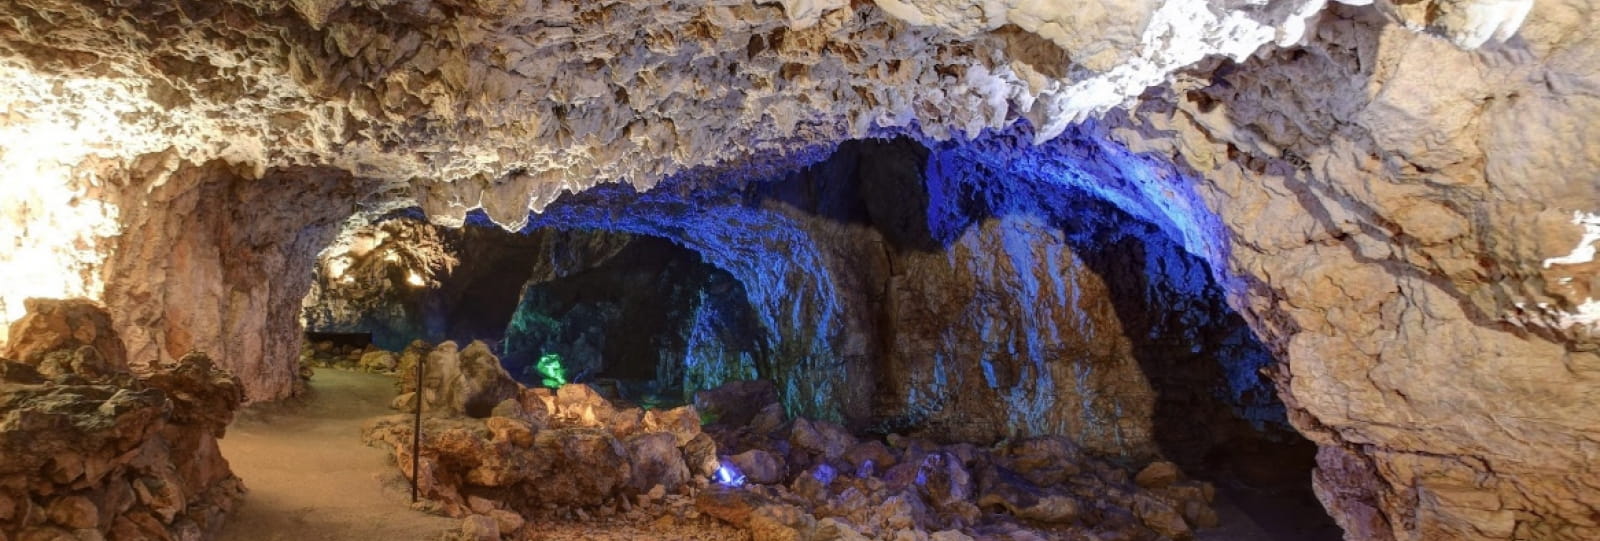 Höhle von La Luire